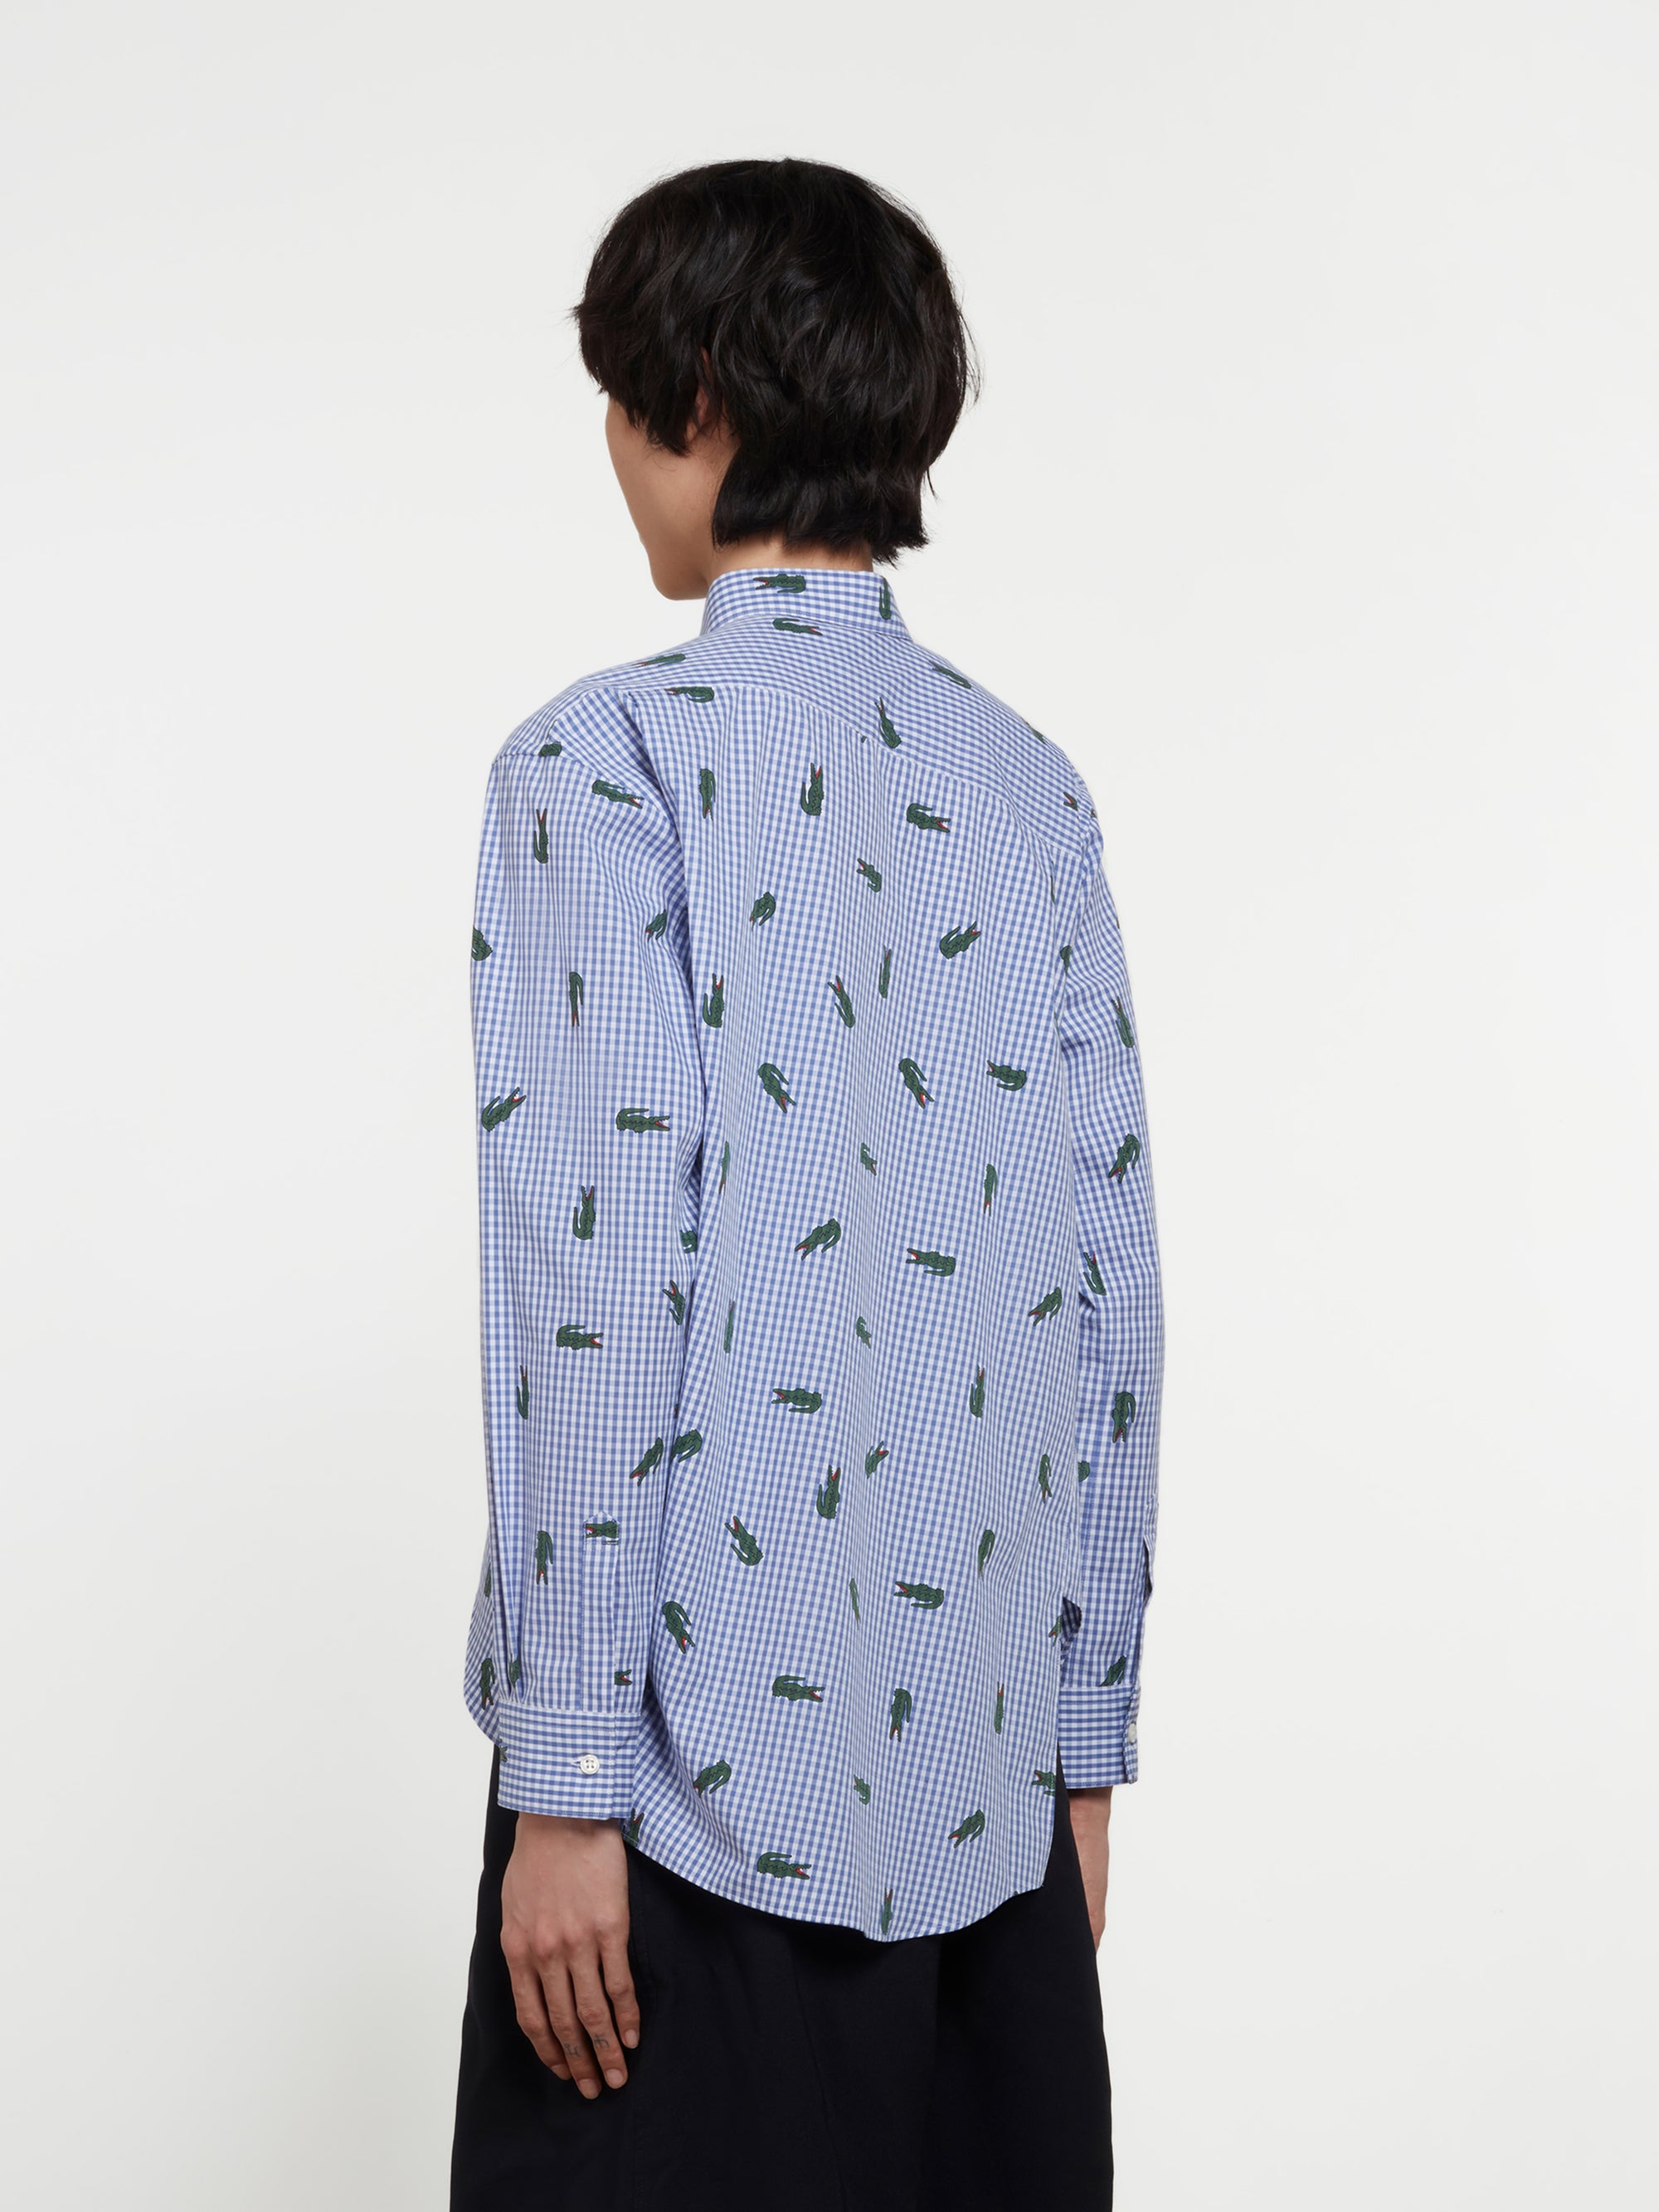 CDG Shirt - Lacoste Men’s Print Shirt - (Check) view 3